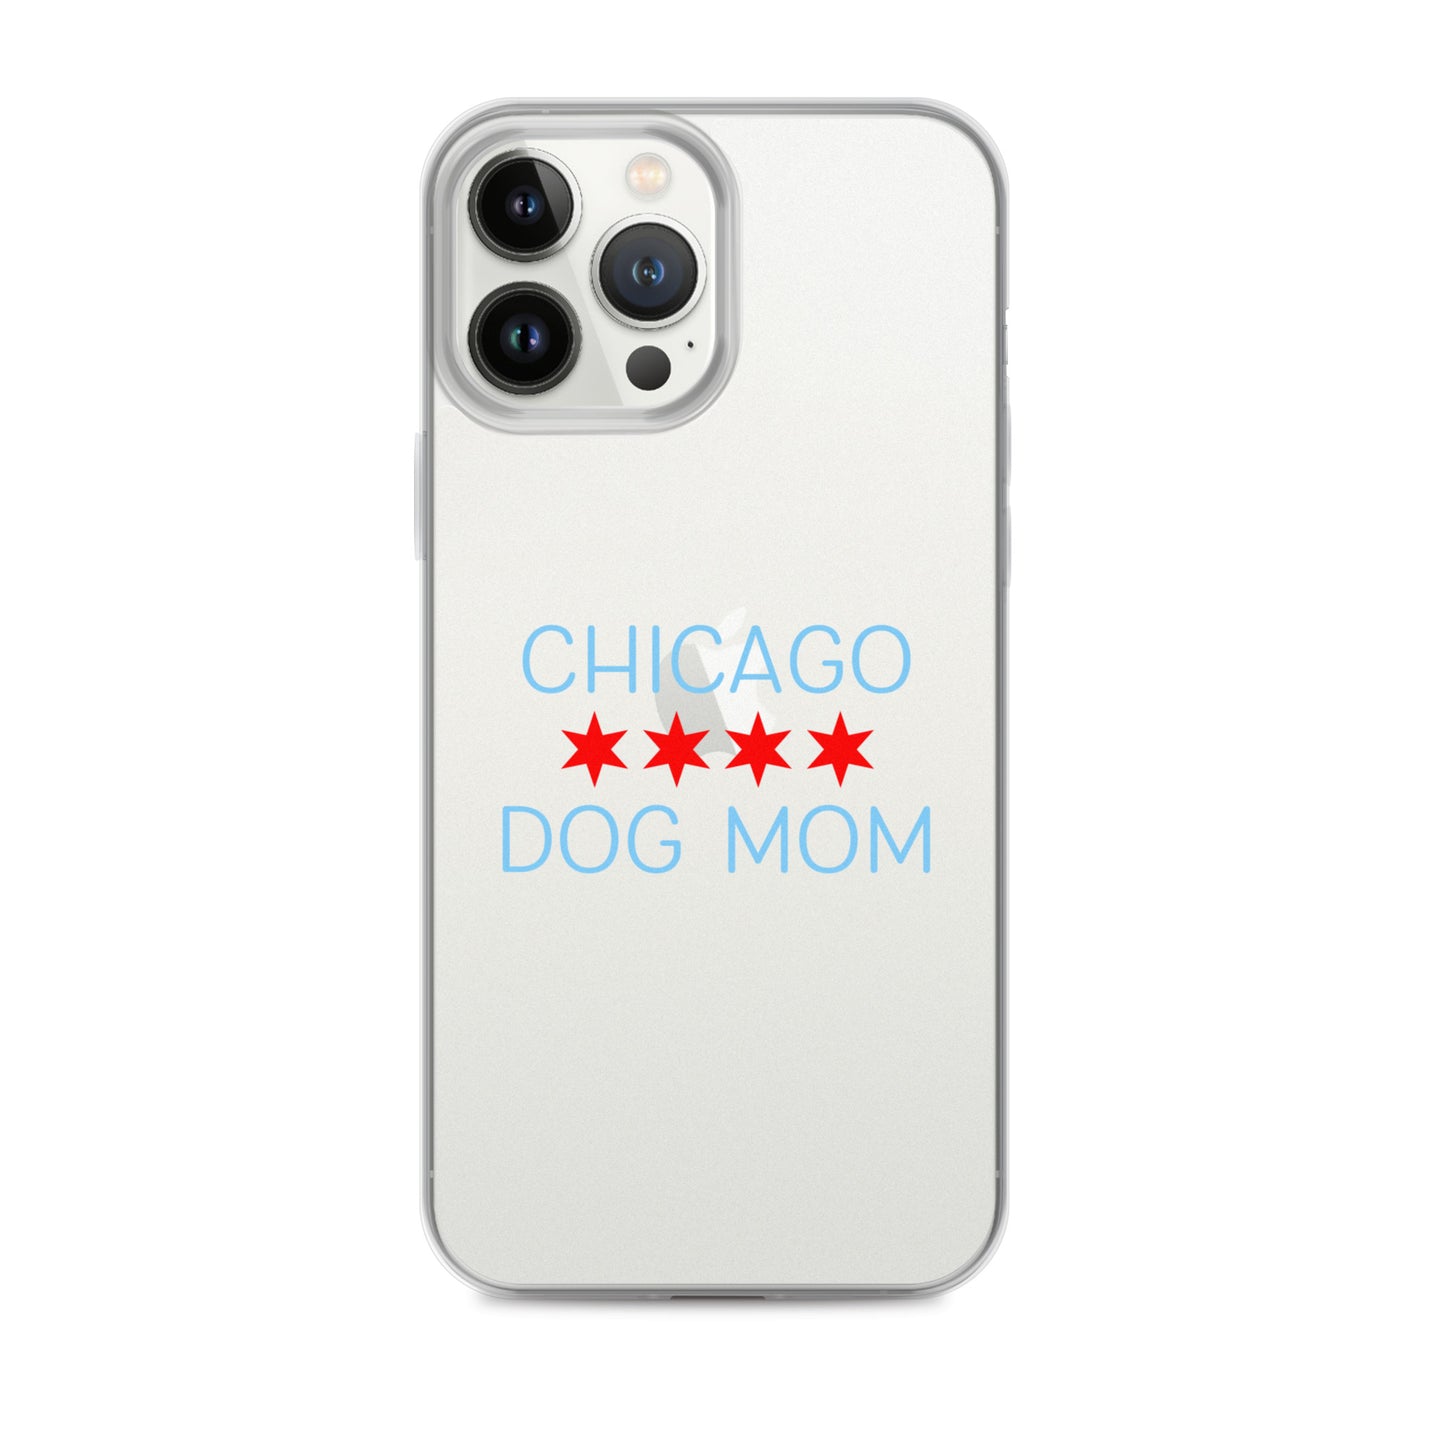 Chicago Dog Mom iPhone Case